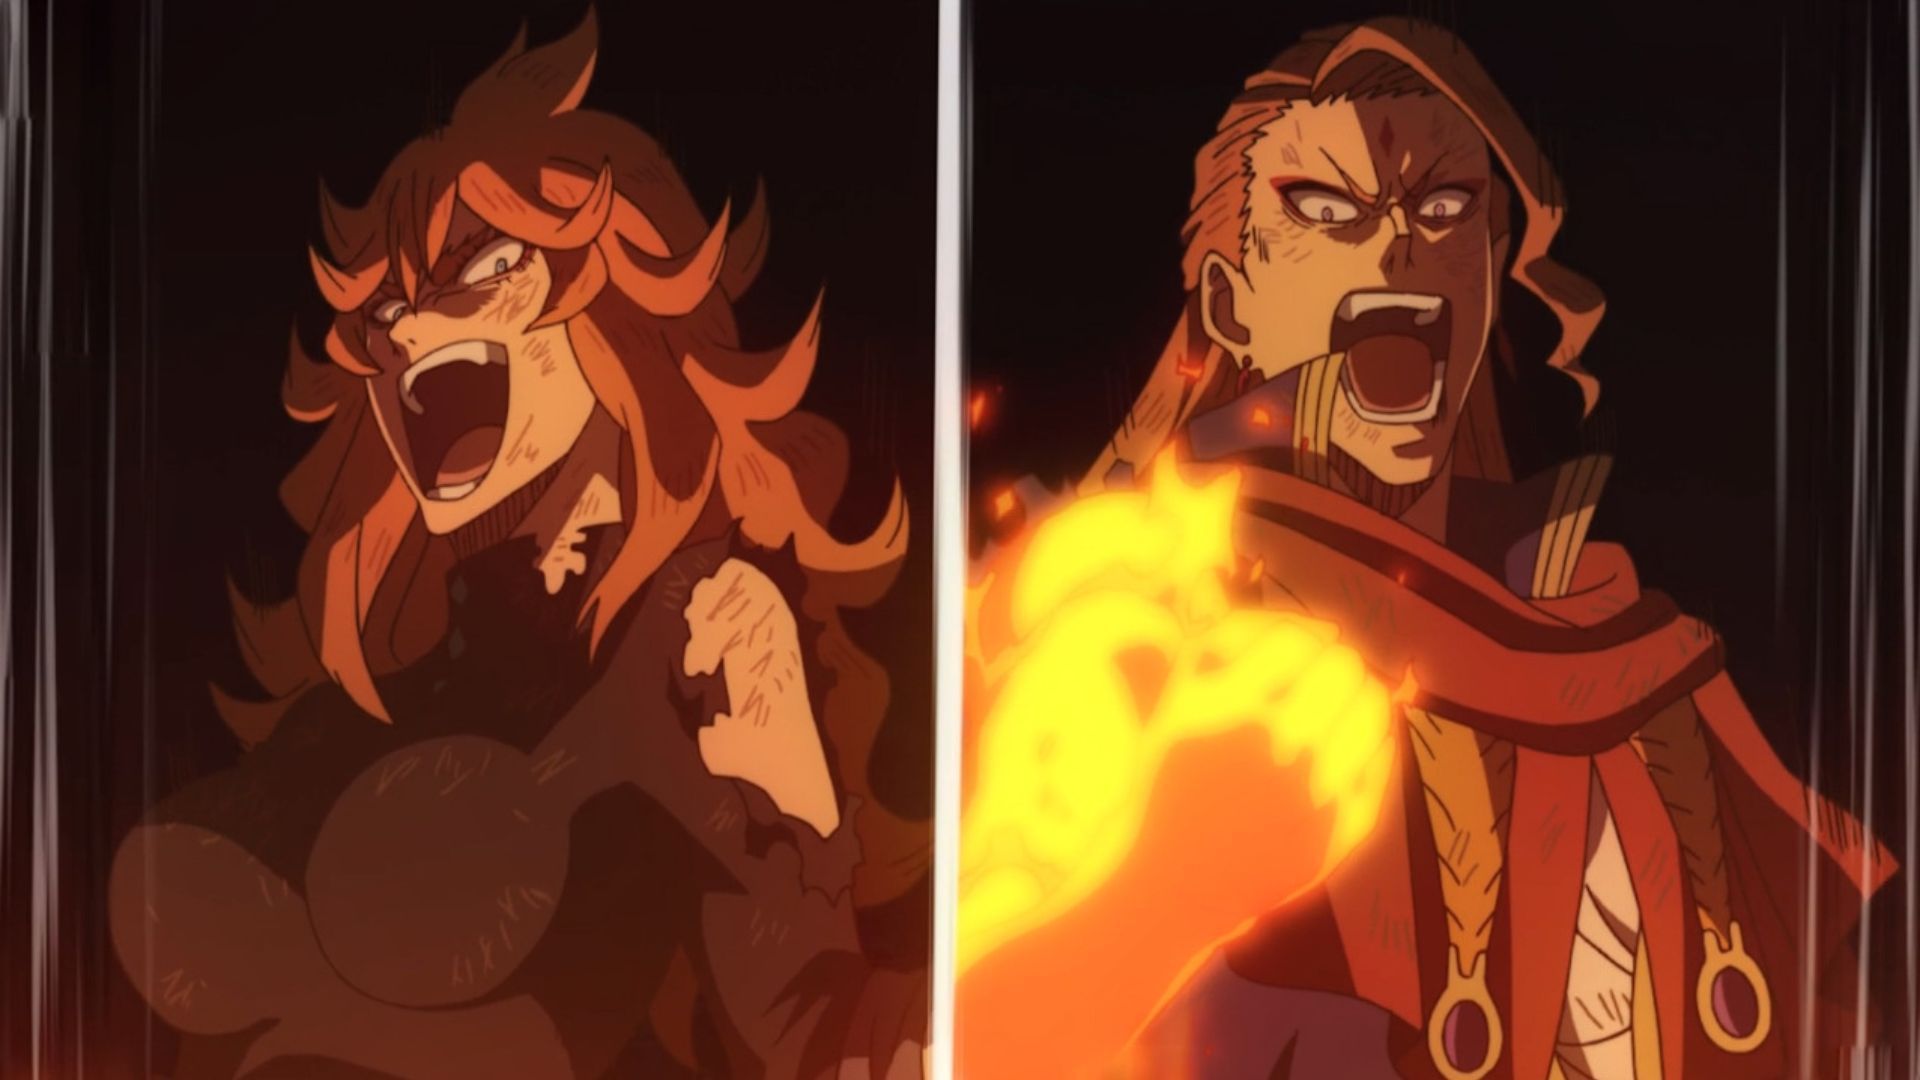 Mereoleona and Fuegoleon as seen in the anime (Image via Studio Pierrot)